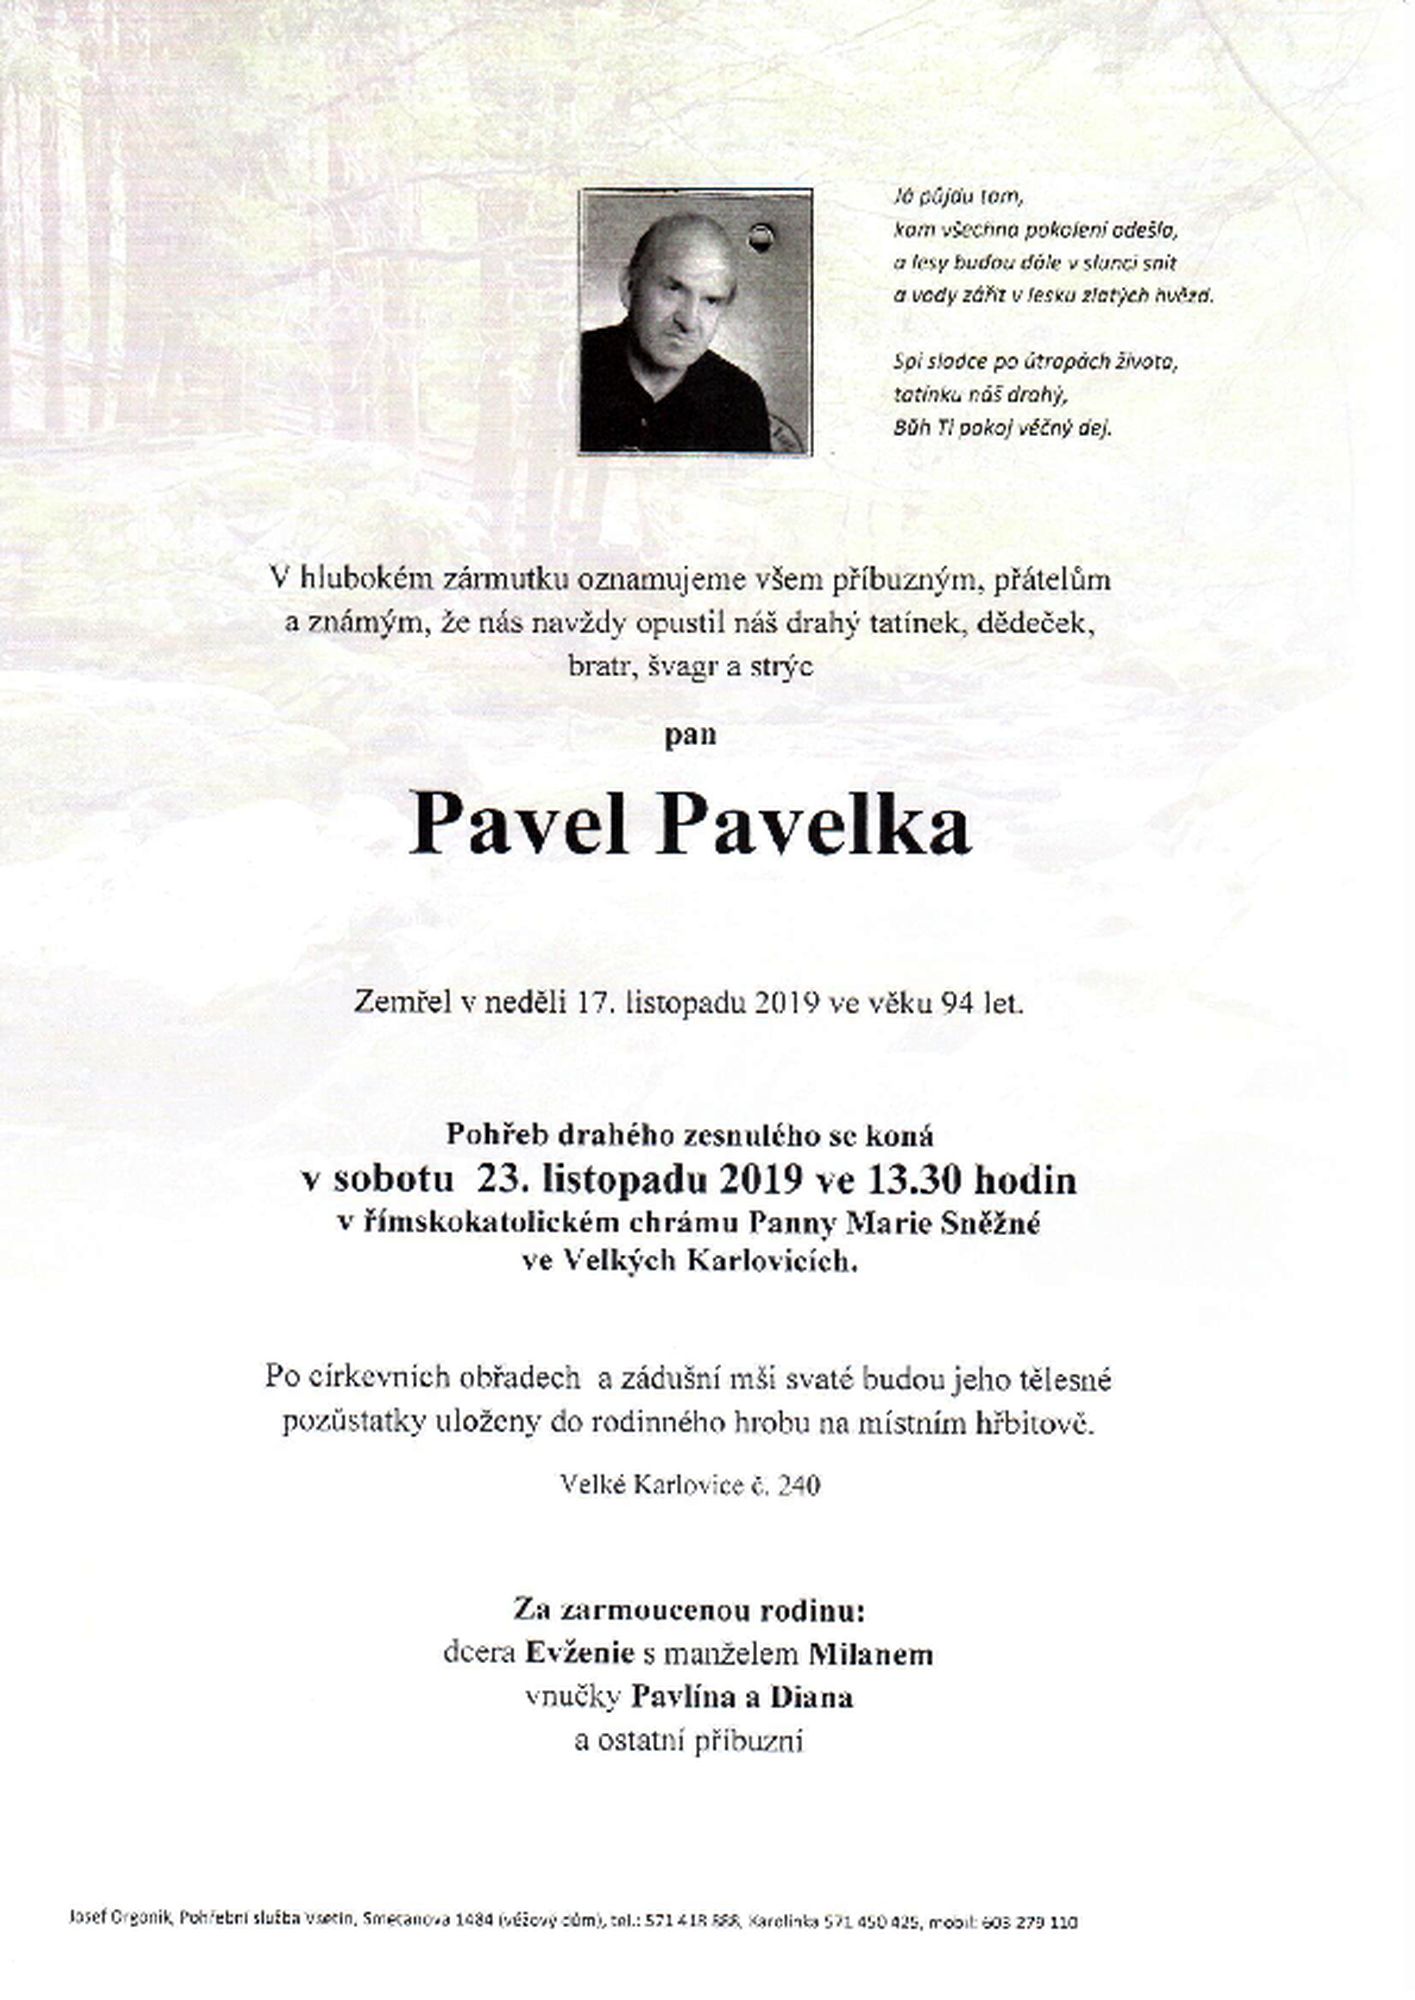 Pavel Pavelka